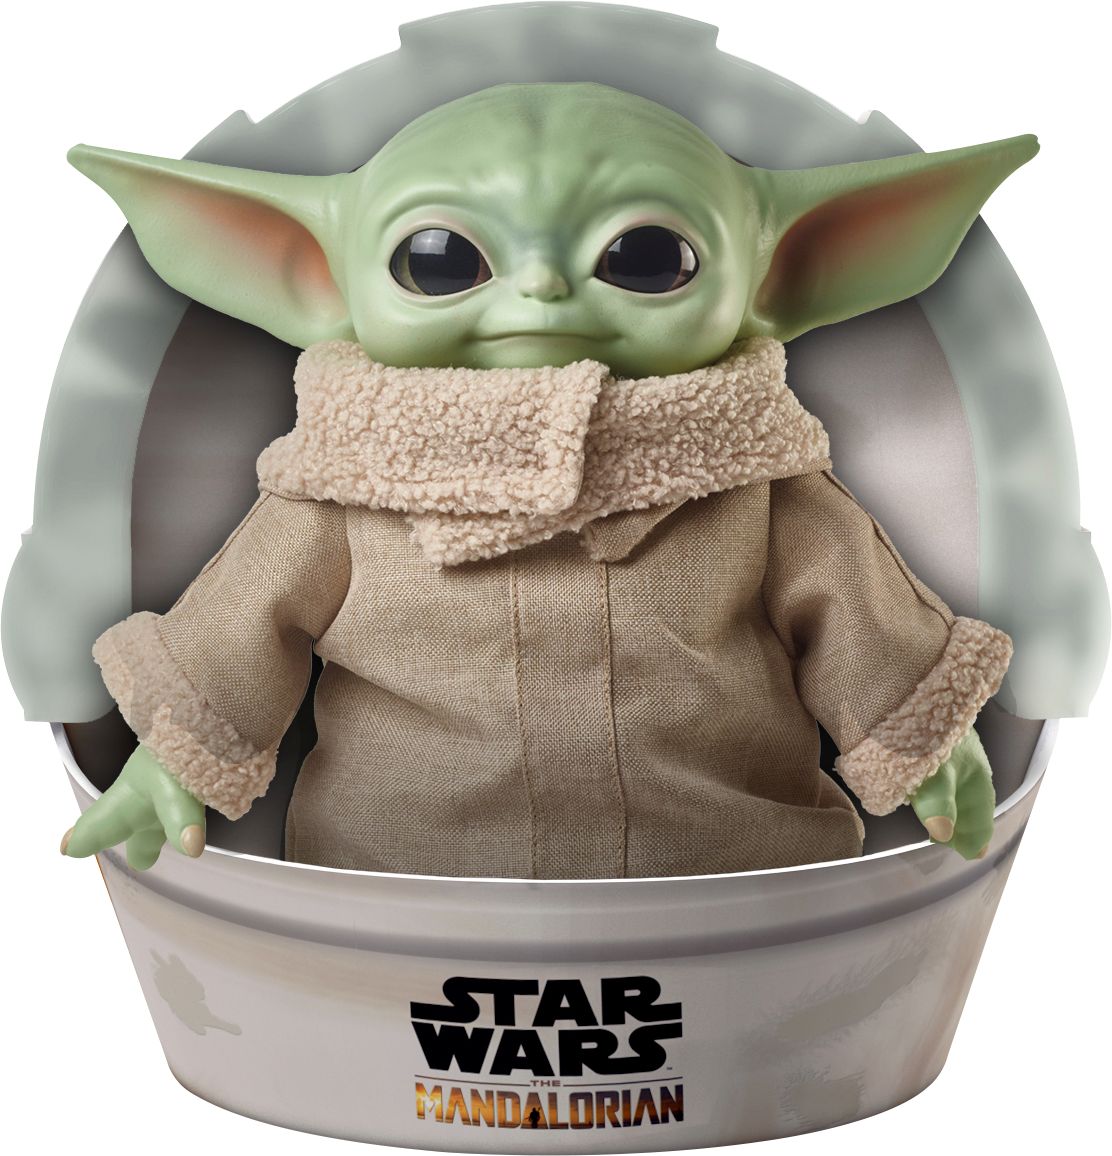 Star Wars Yoda The Child 11 inch Plush Toy GWD85 for sale online 